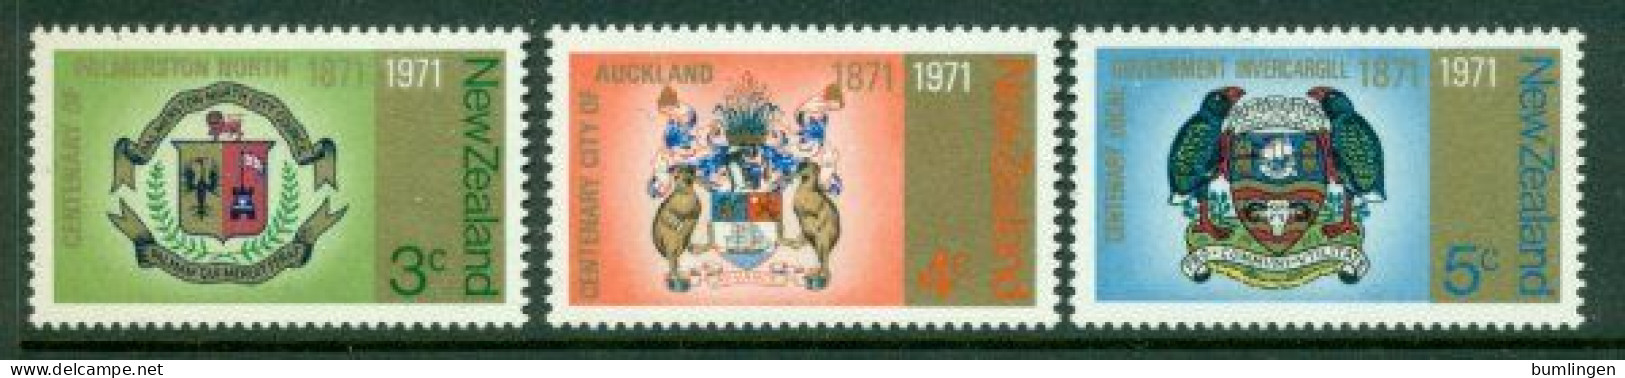 NEW ZEALAND 1971 Mi 554-56** City Coat Of Arms [B874] - Sellos